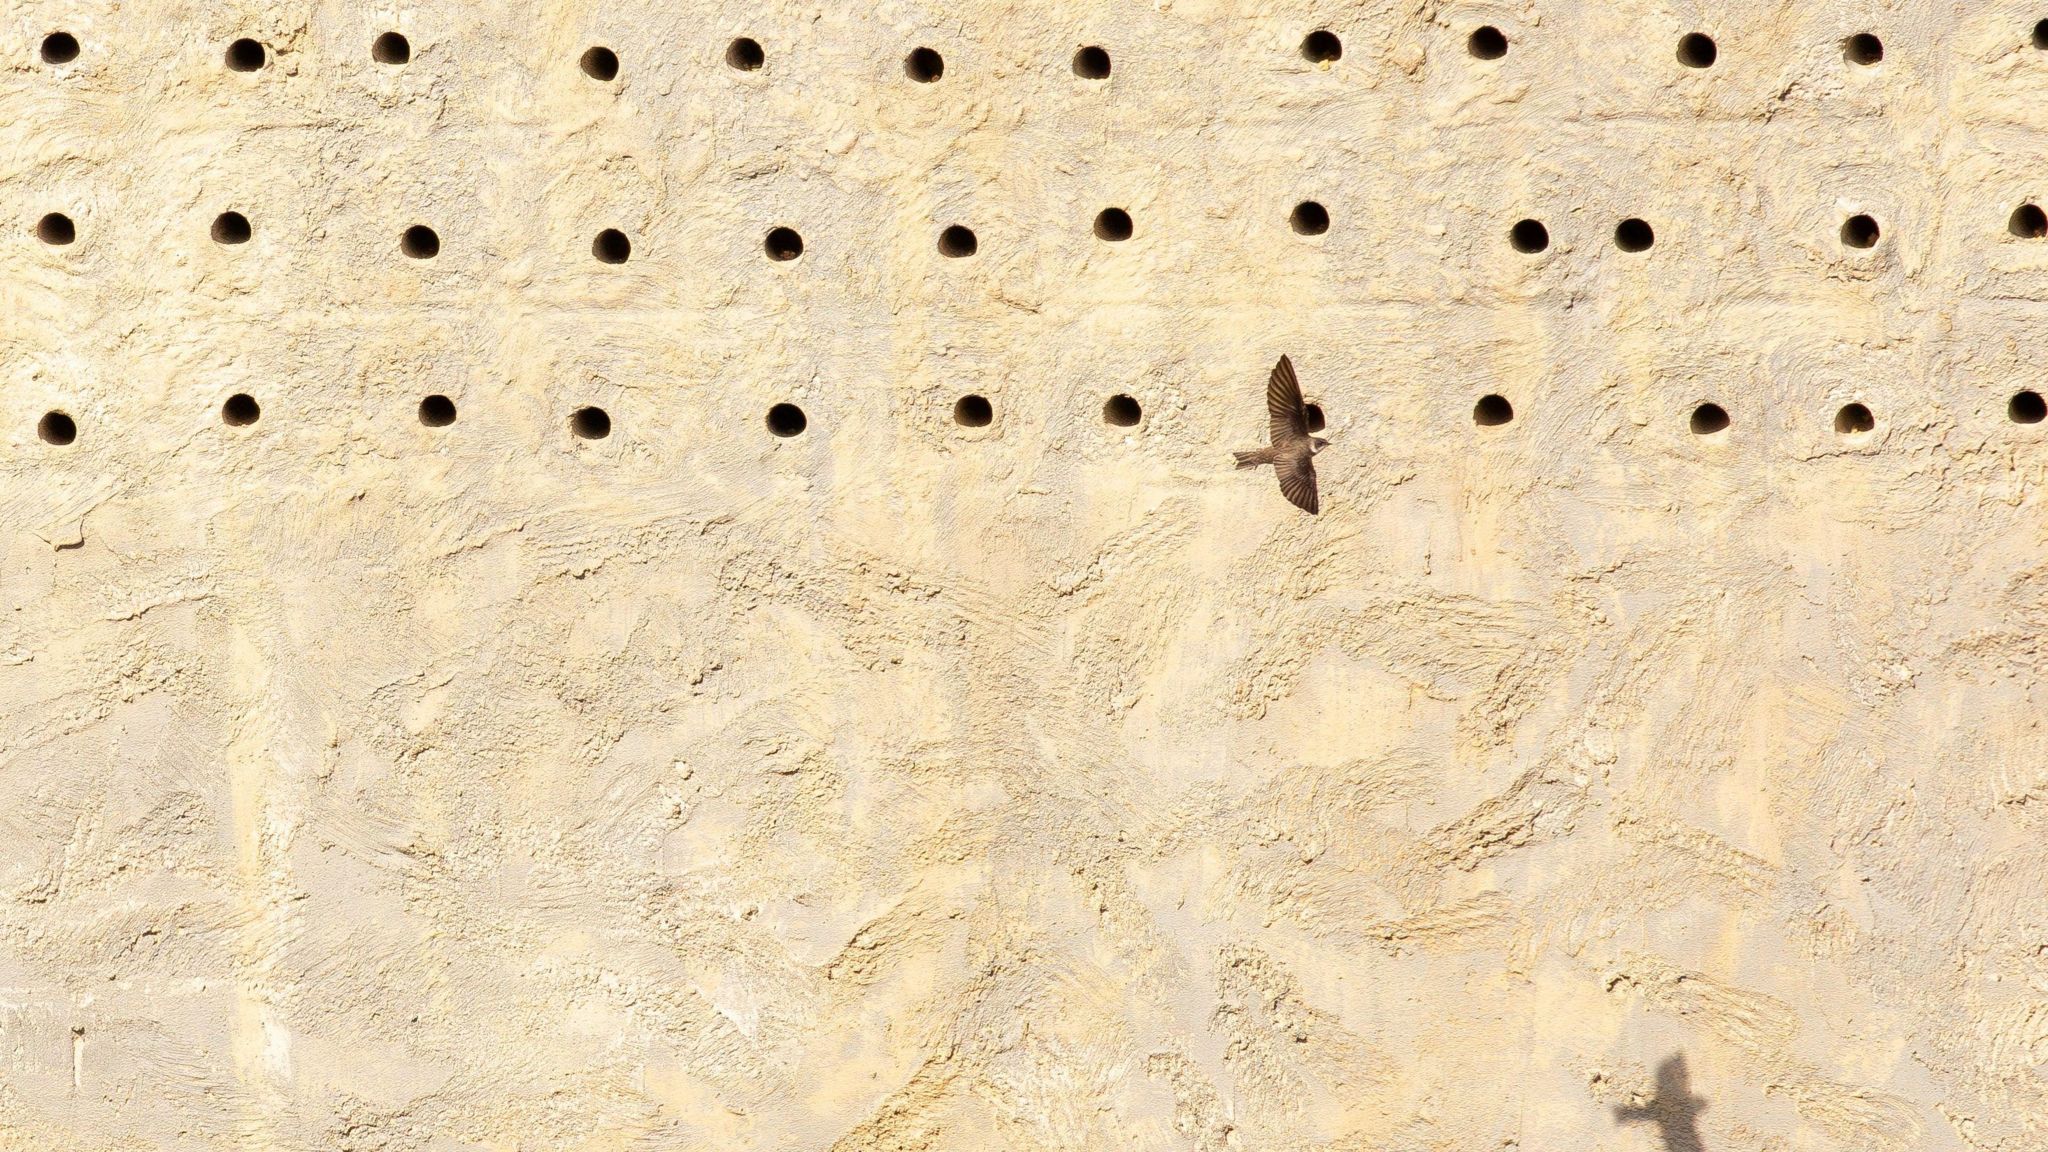 A sand martin flies by the artificial nest